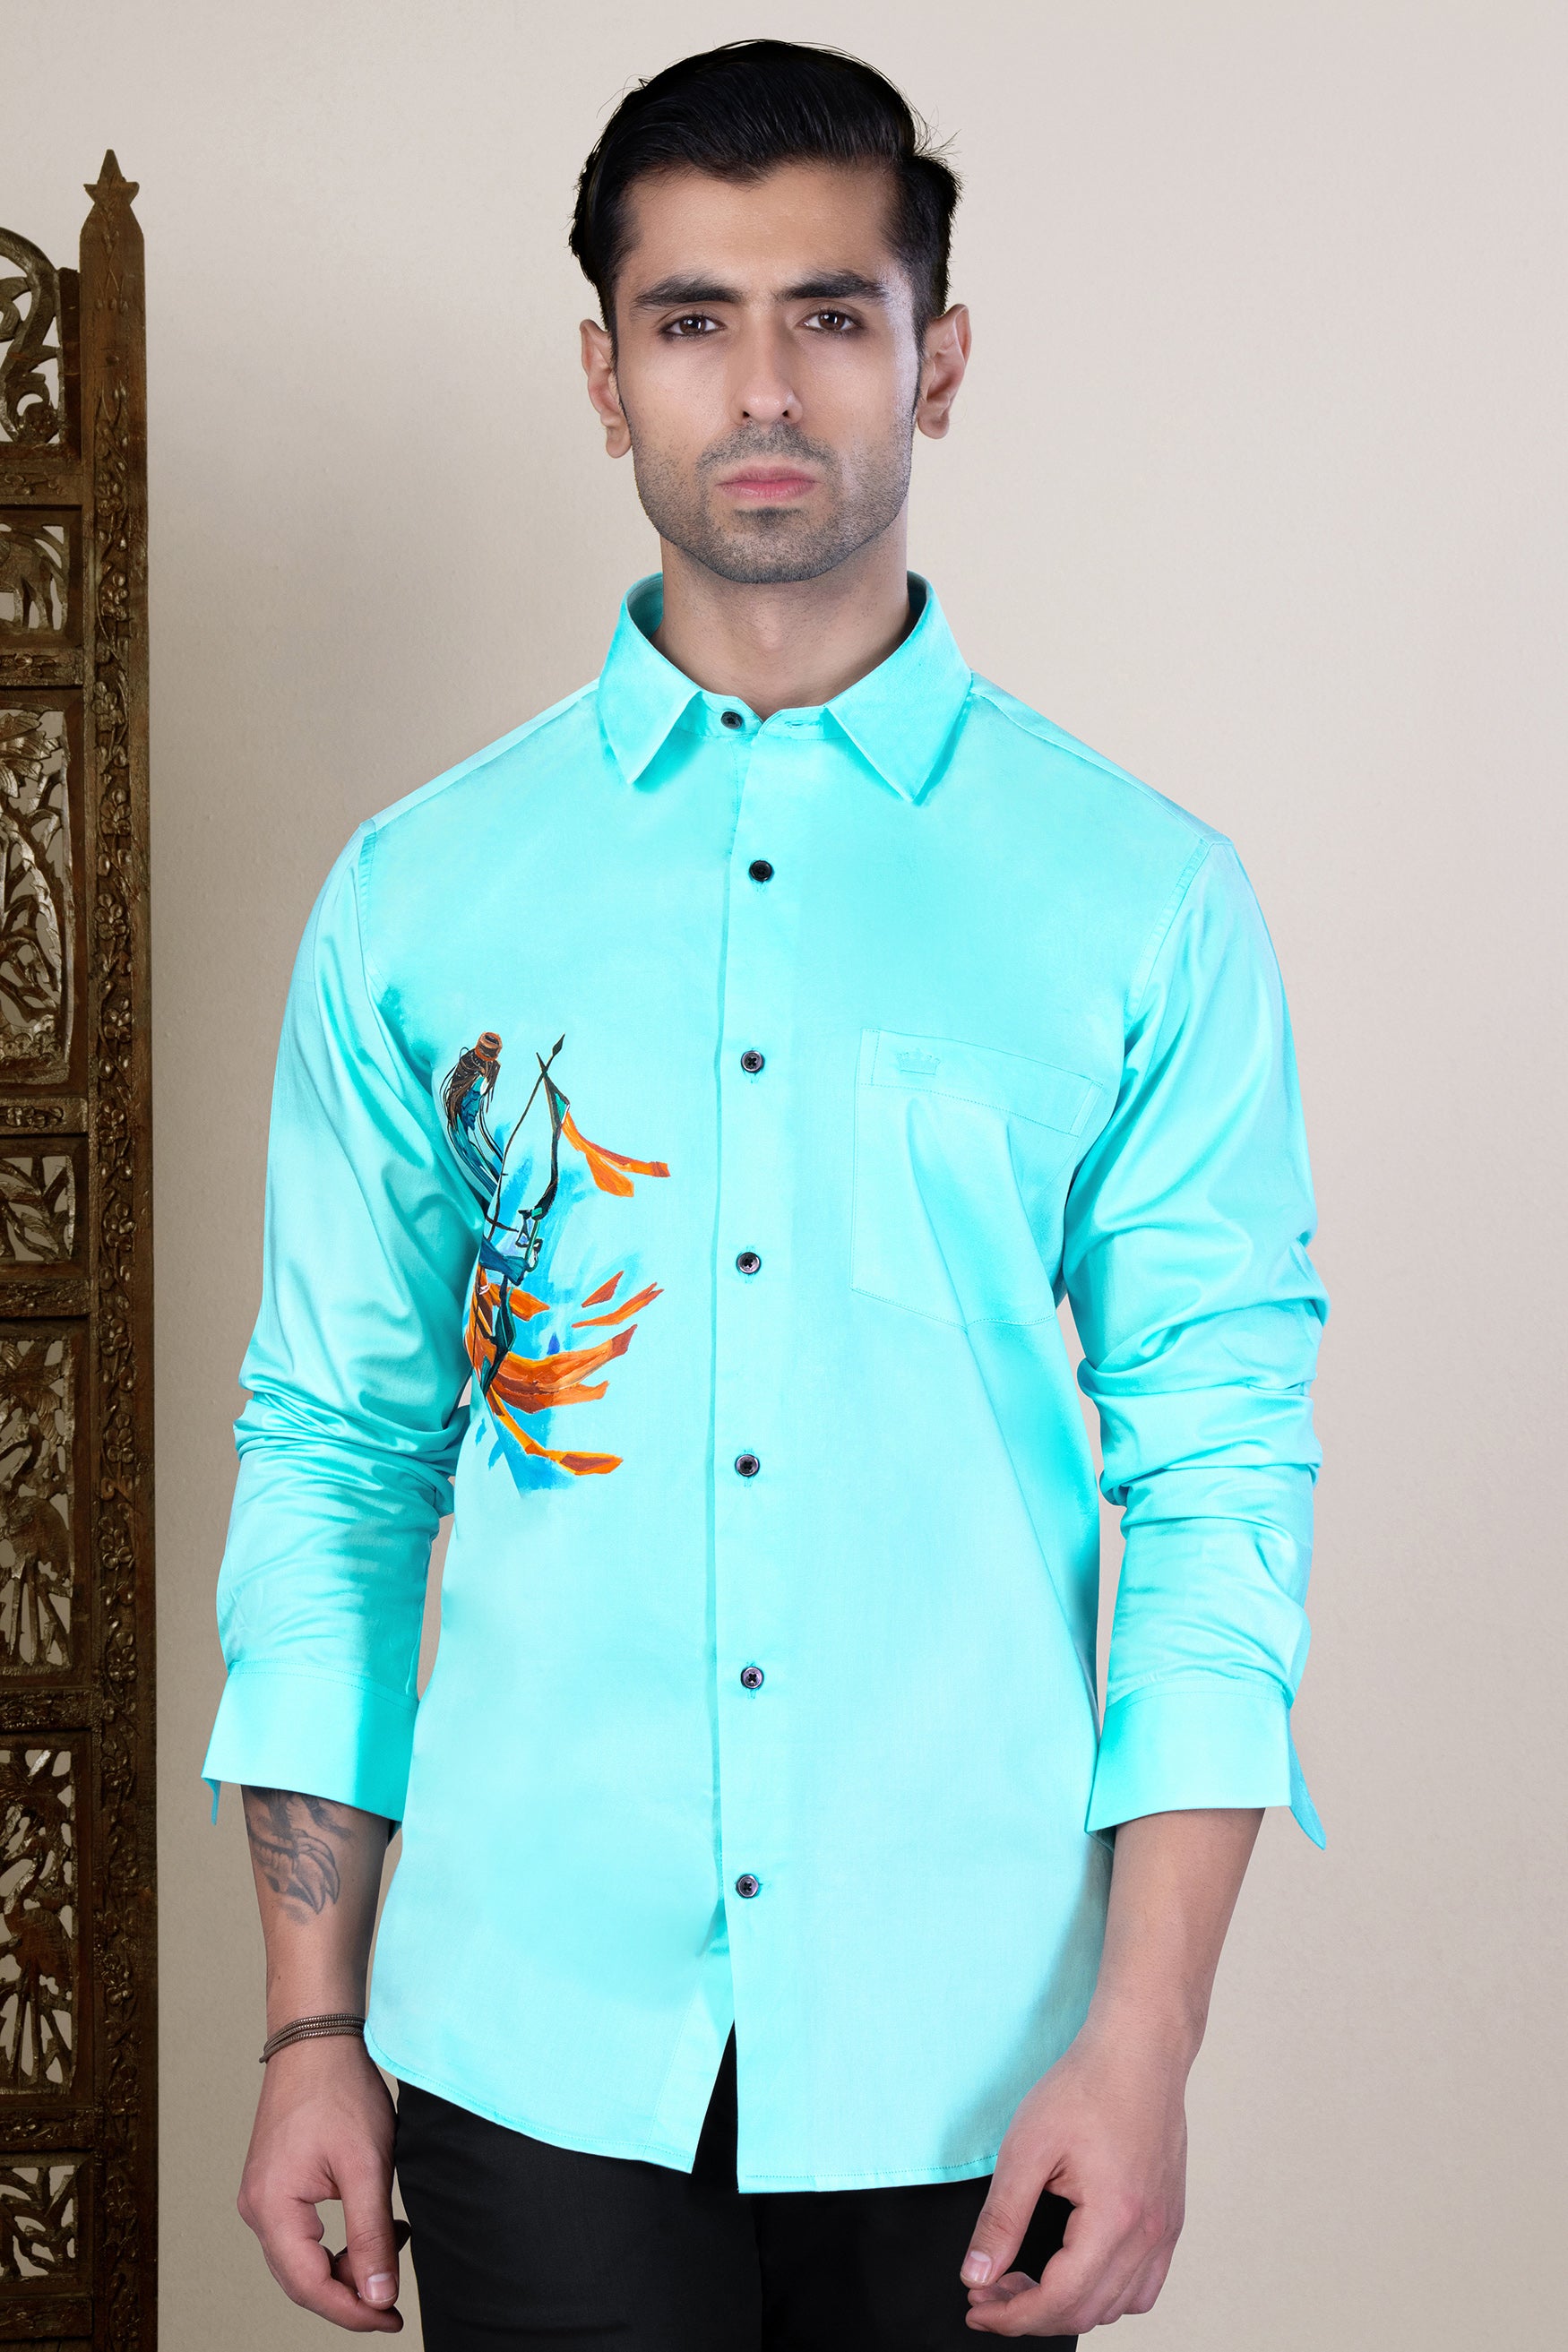 Cyan Blue Lord Ram Hand Painted Effect Subtle Sheen Super Soft Premium Cotton Designer Shirt